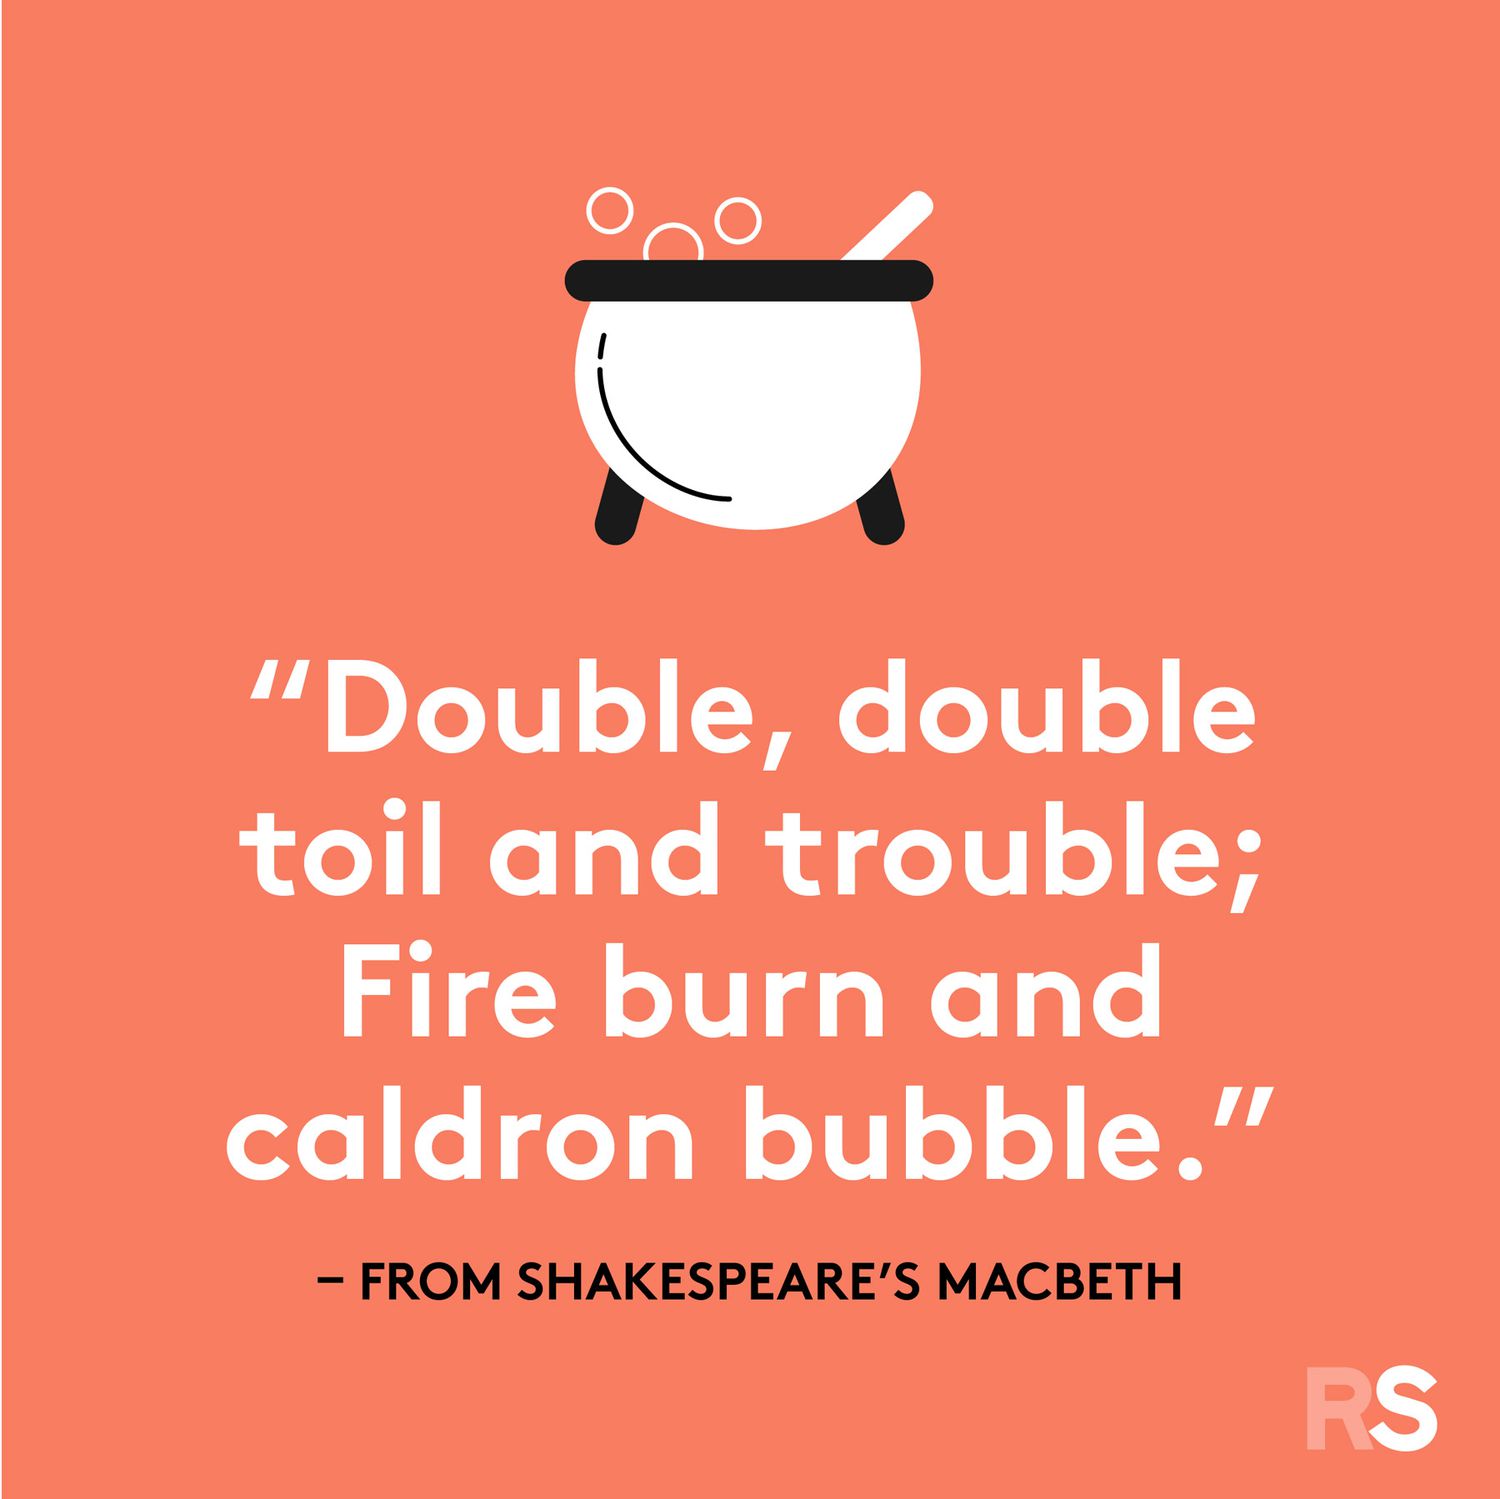 Halloween quotes, sayings, phrases - Shakespeare Macbeth quote